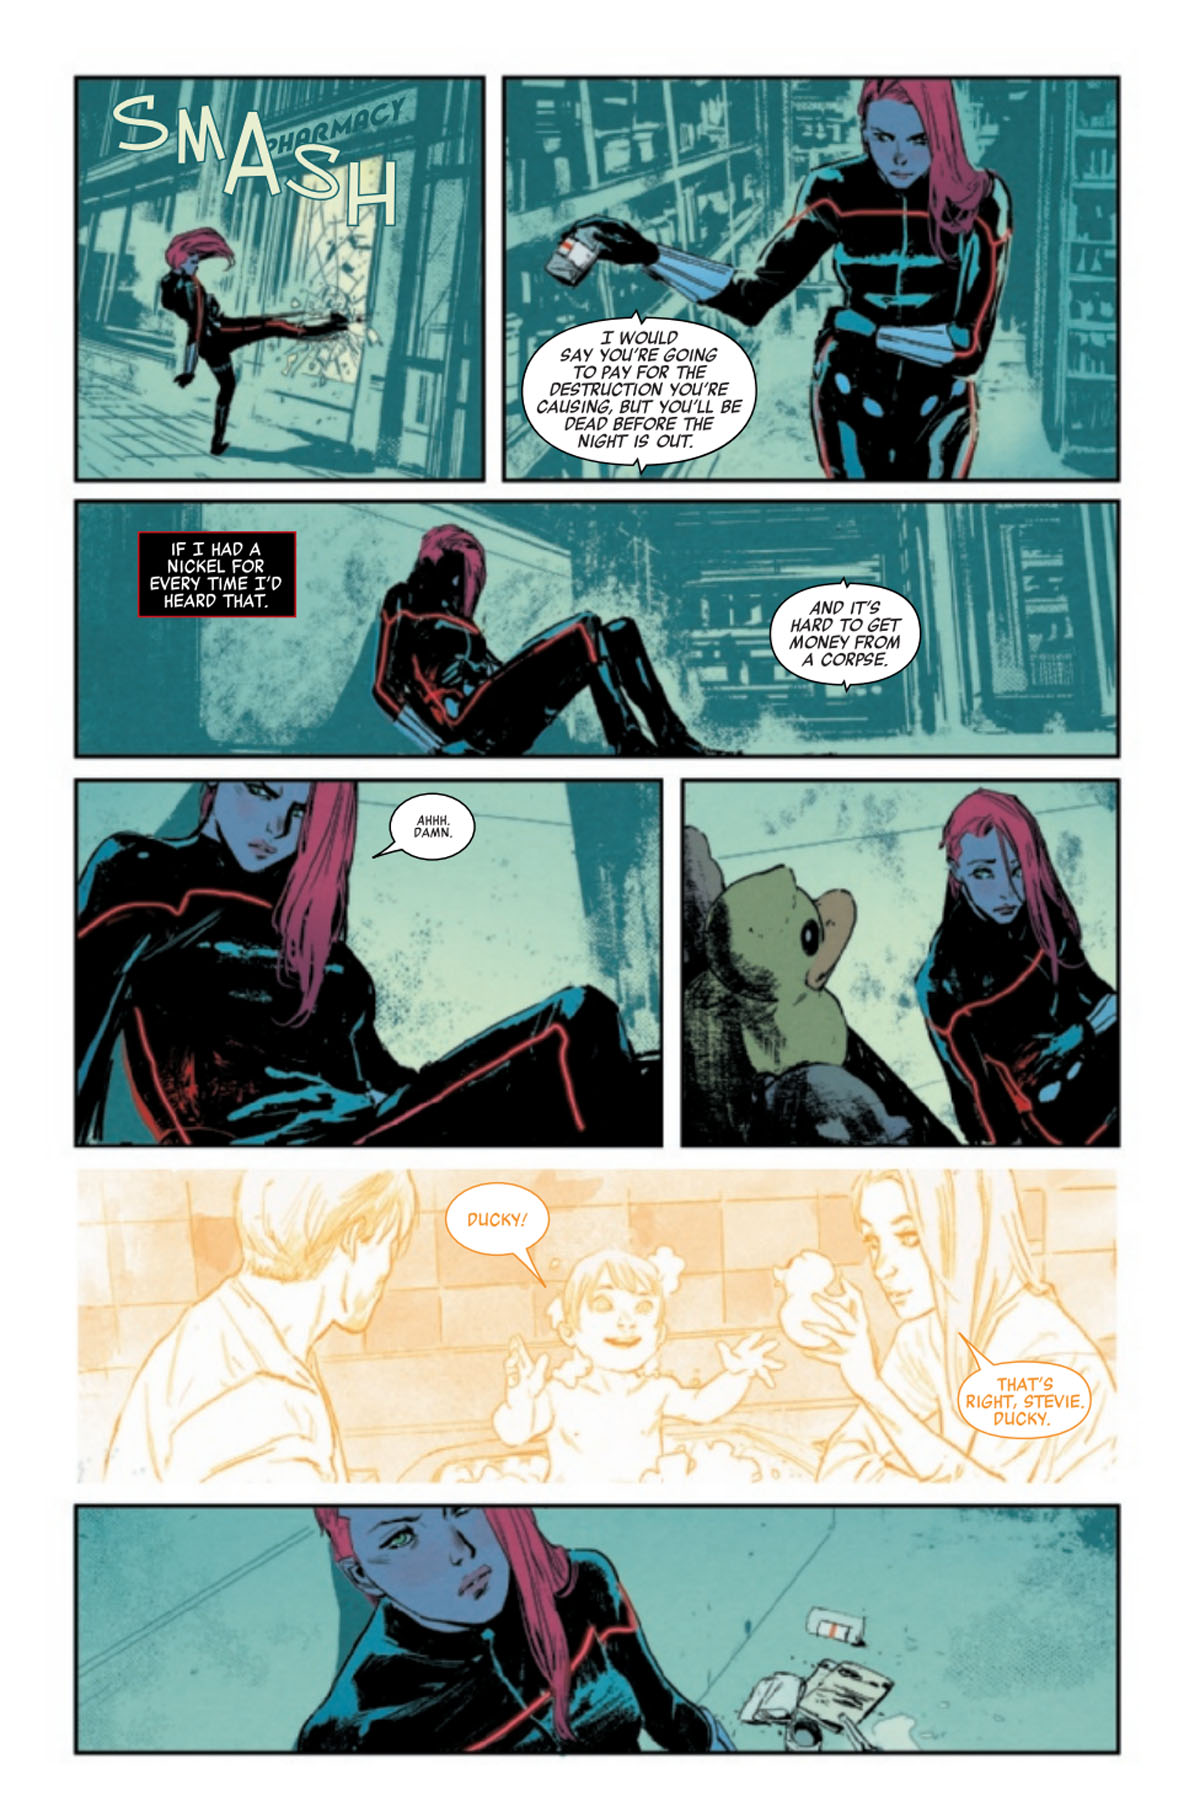 Black Widow #6 page 4